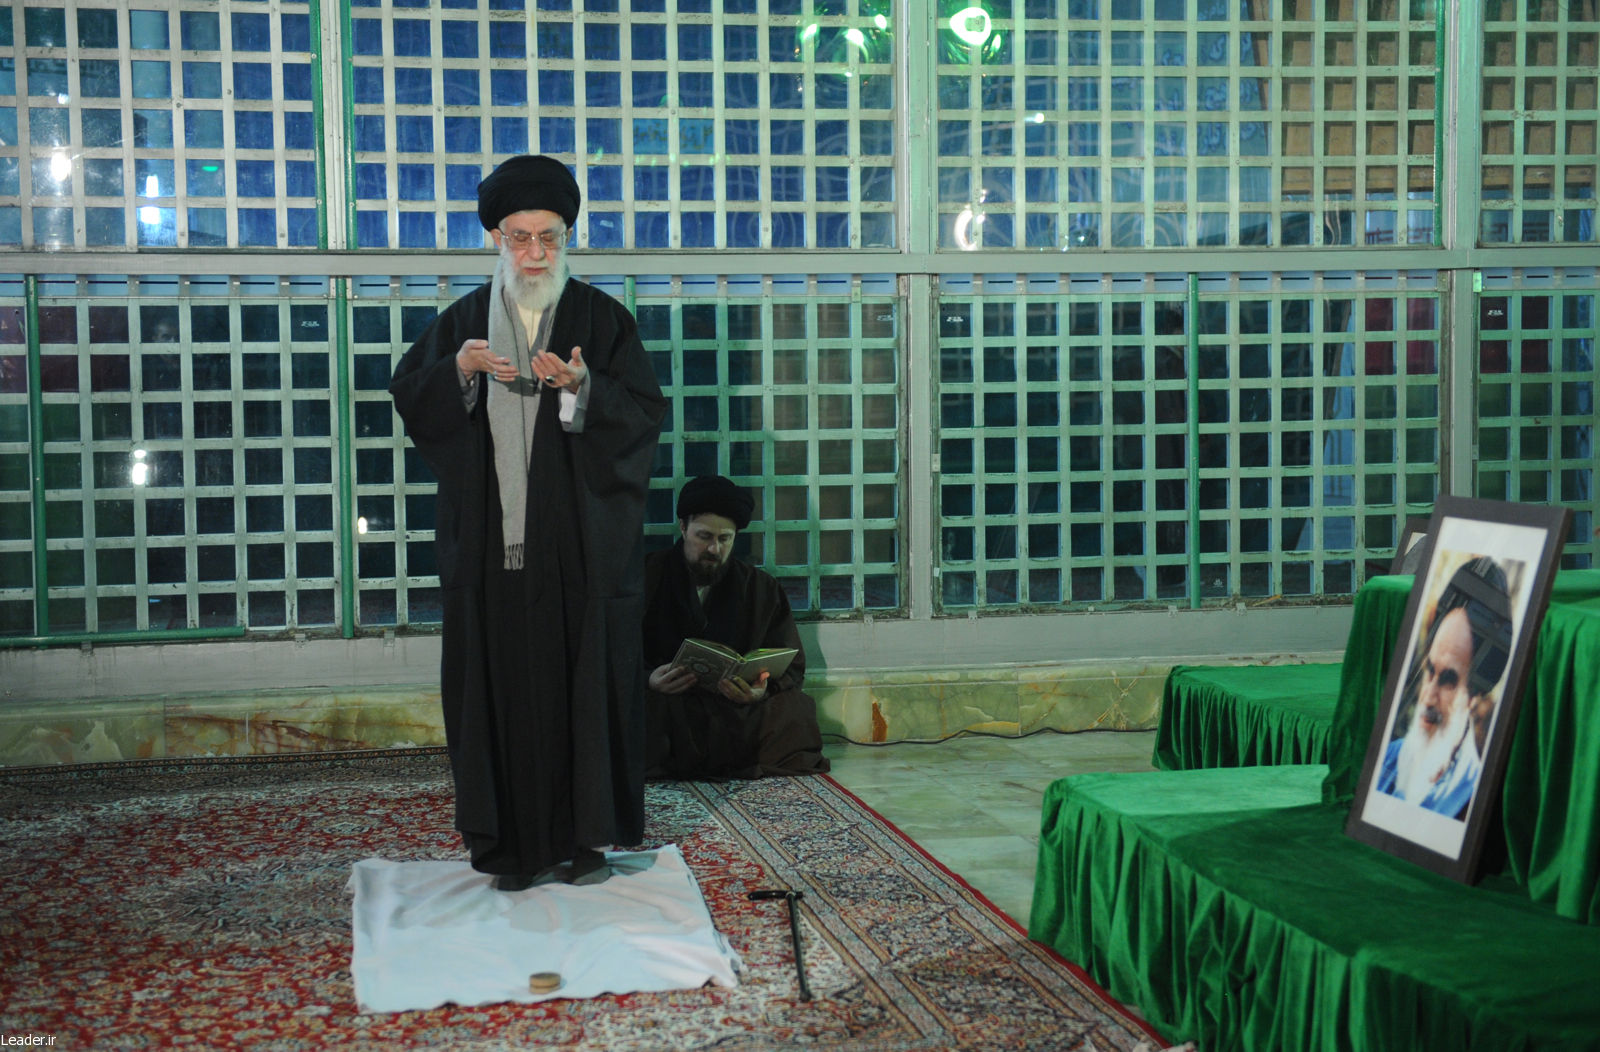 Что читает имам. Аятолла Хомейни могила. Имам Хомейни и имам Хаменеи. Мавзолей имама Хомейни. Гробницы имама Хомейни.